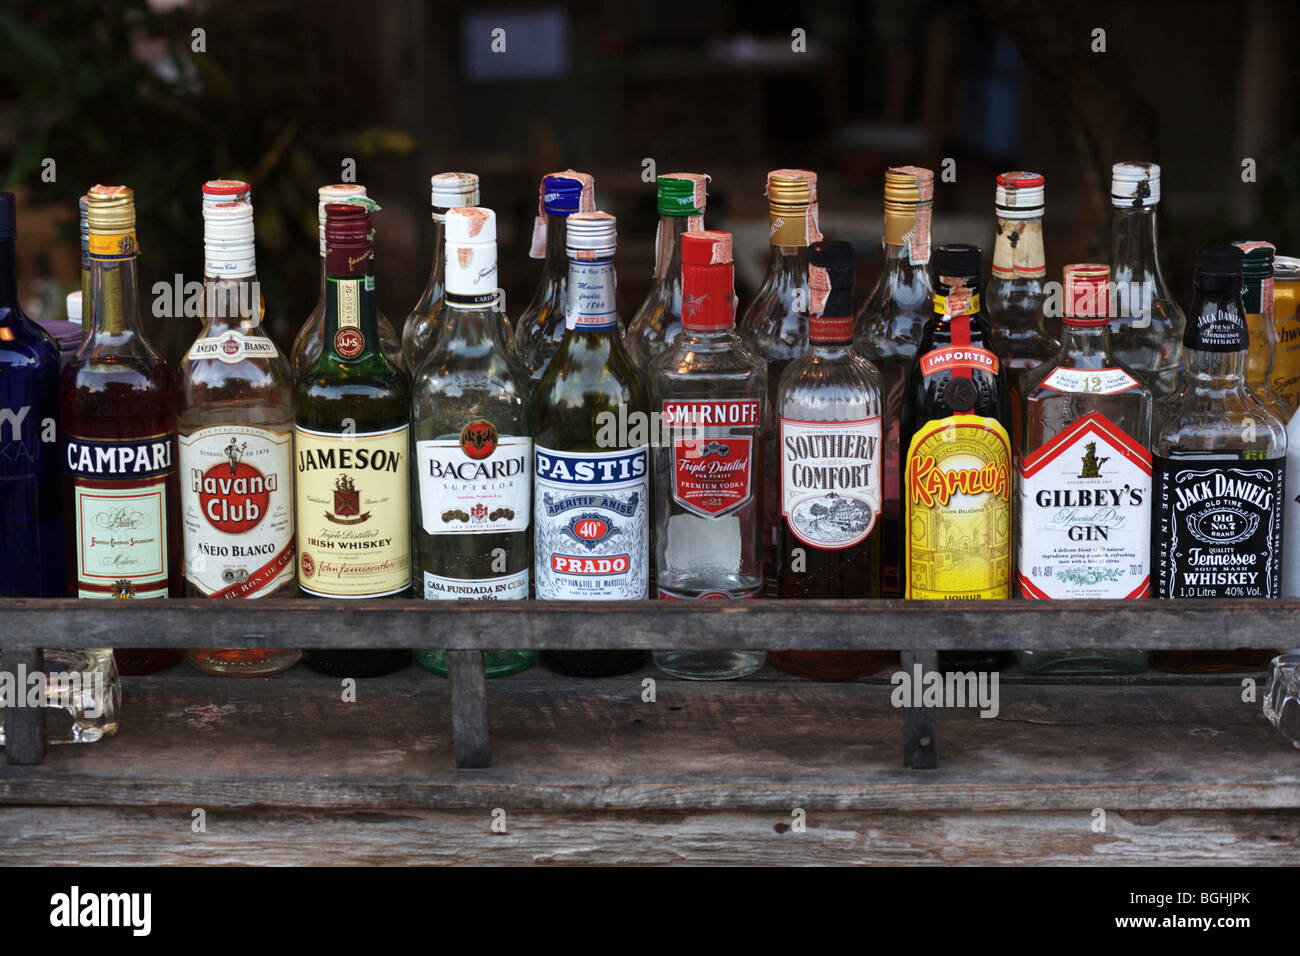 Bottles of spirits or liqour Stock Photo